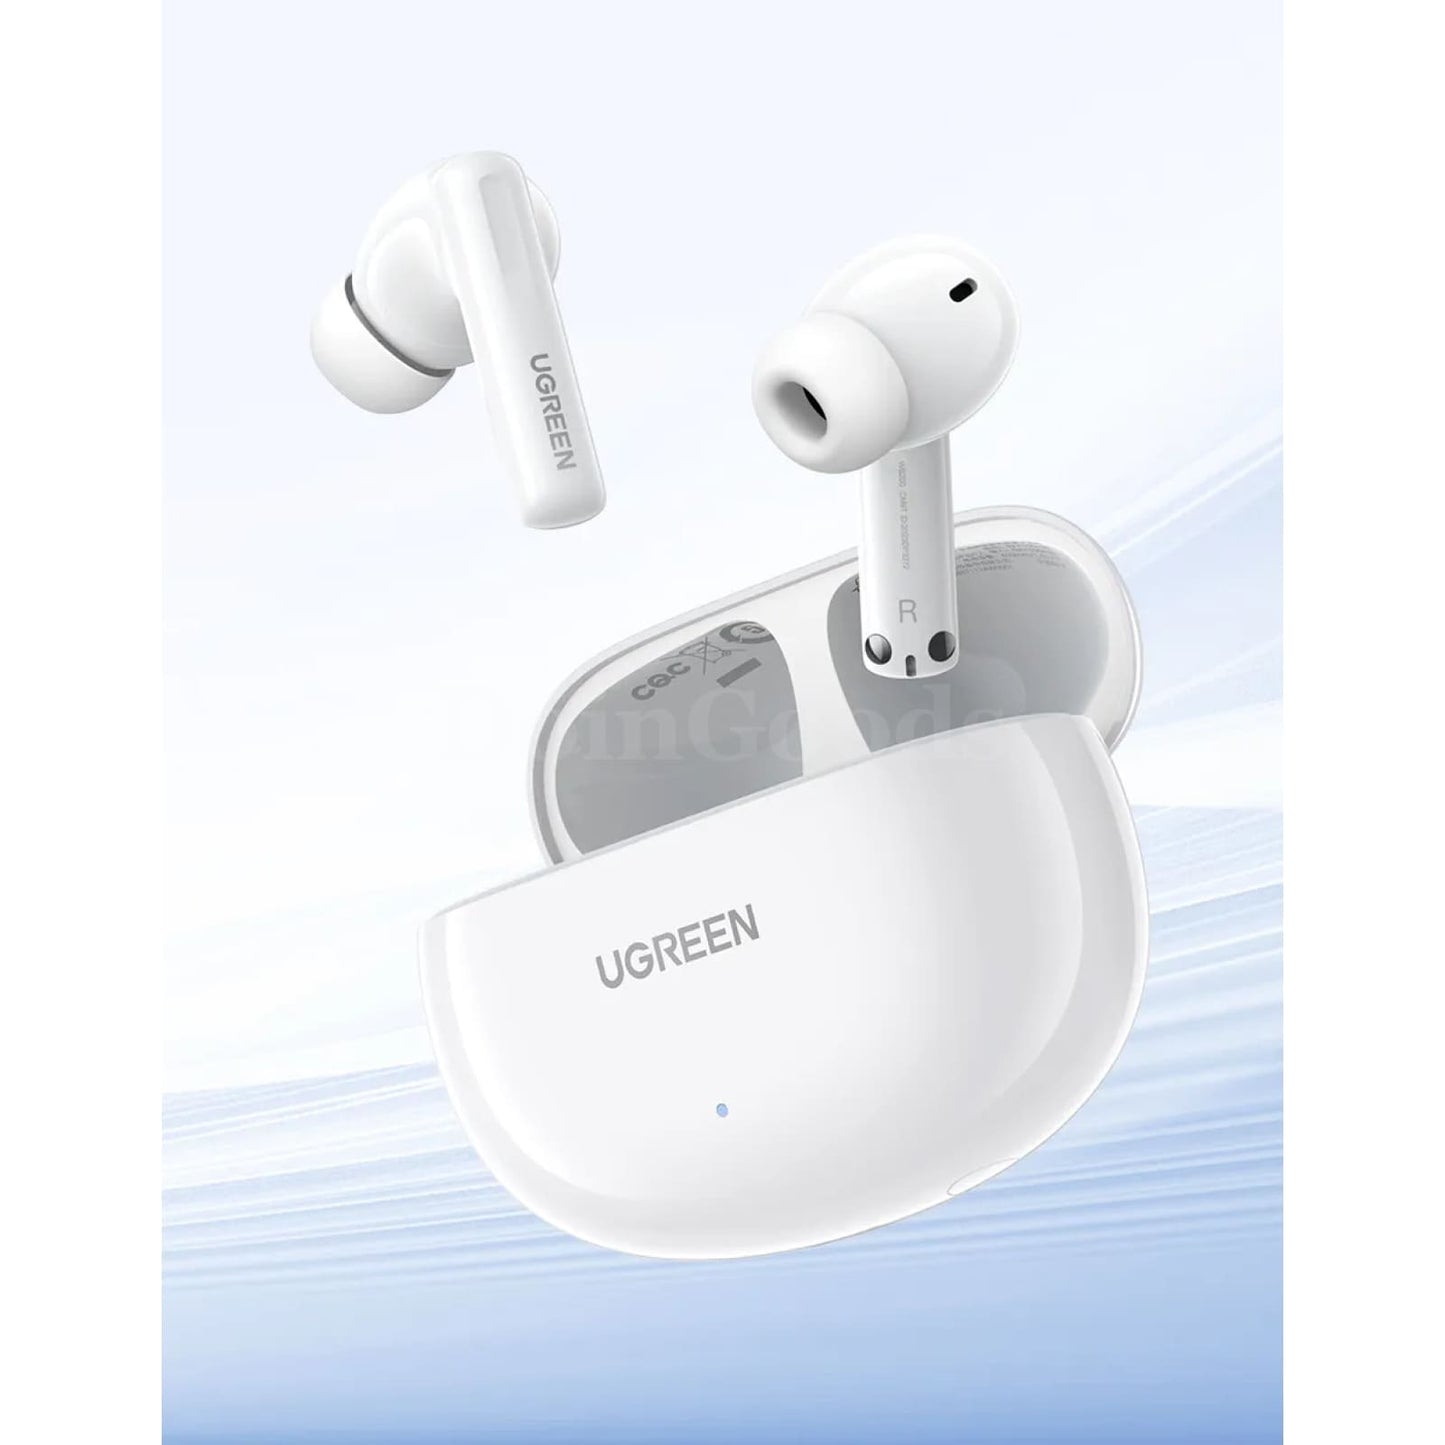 Ugreen Hitune X6 Anc Wireless Headphone Bluetooth 5.1 Tws Earbuds Iphone Pro Max 301635